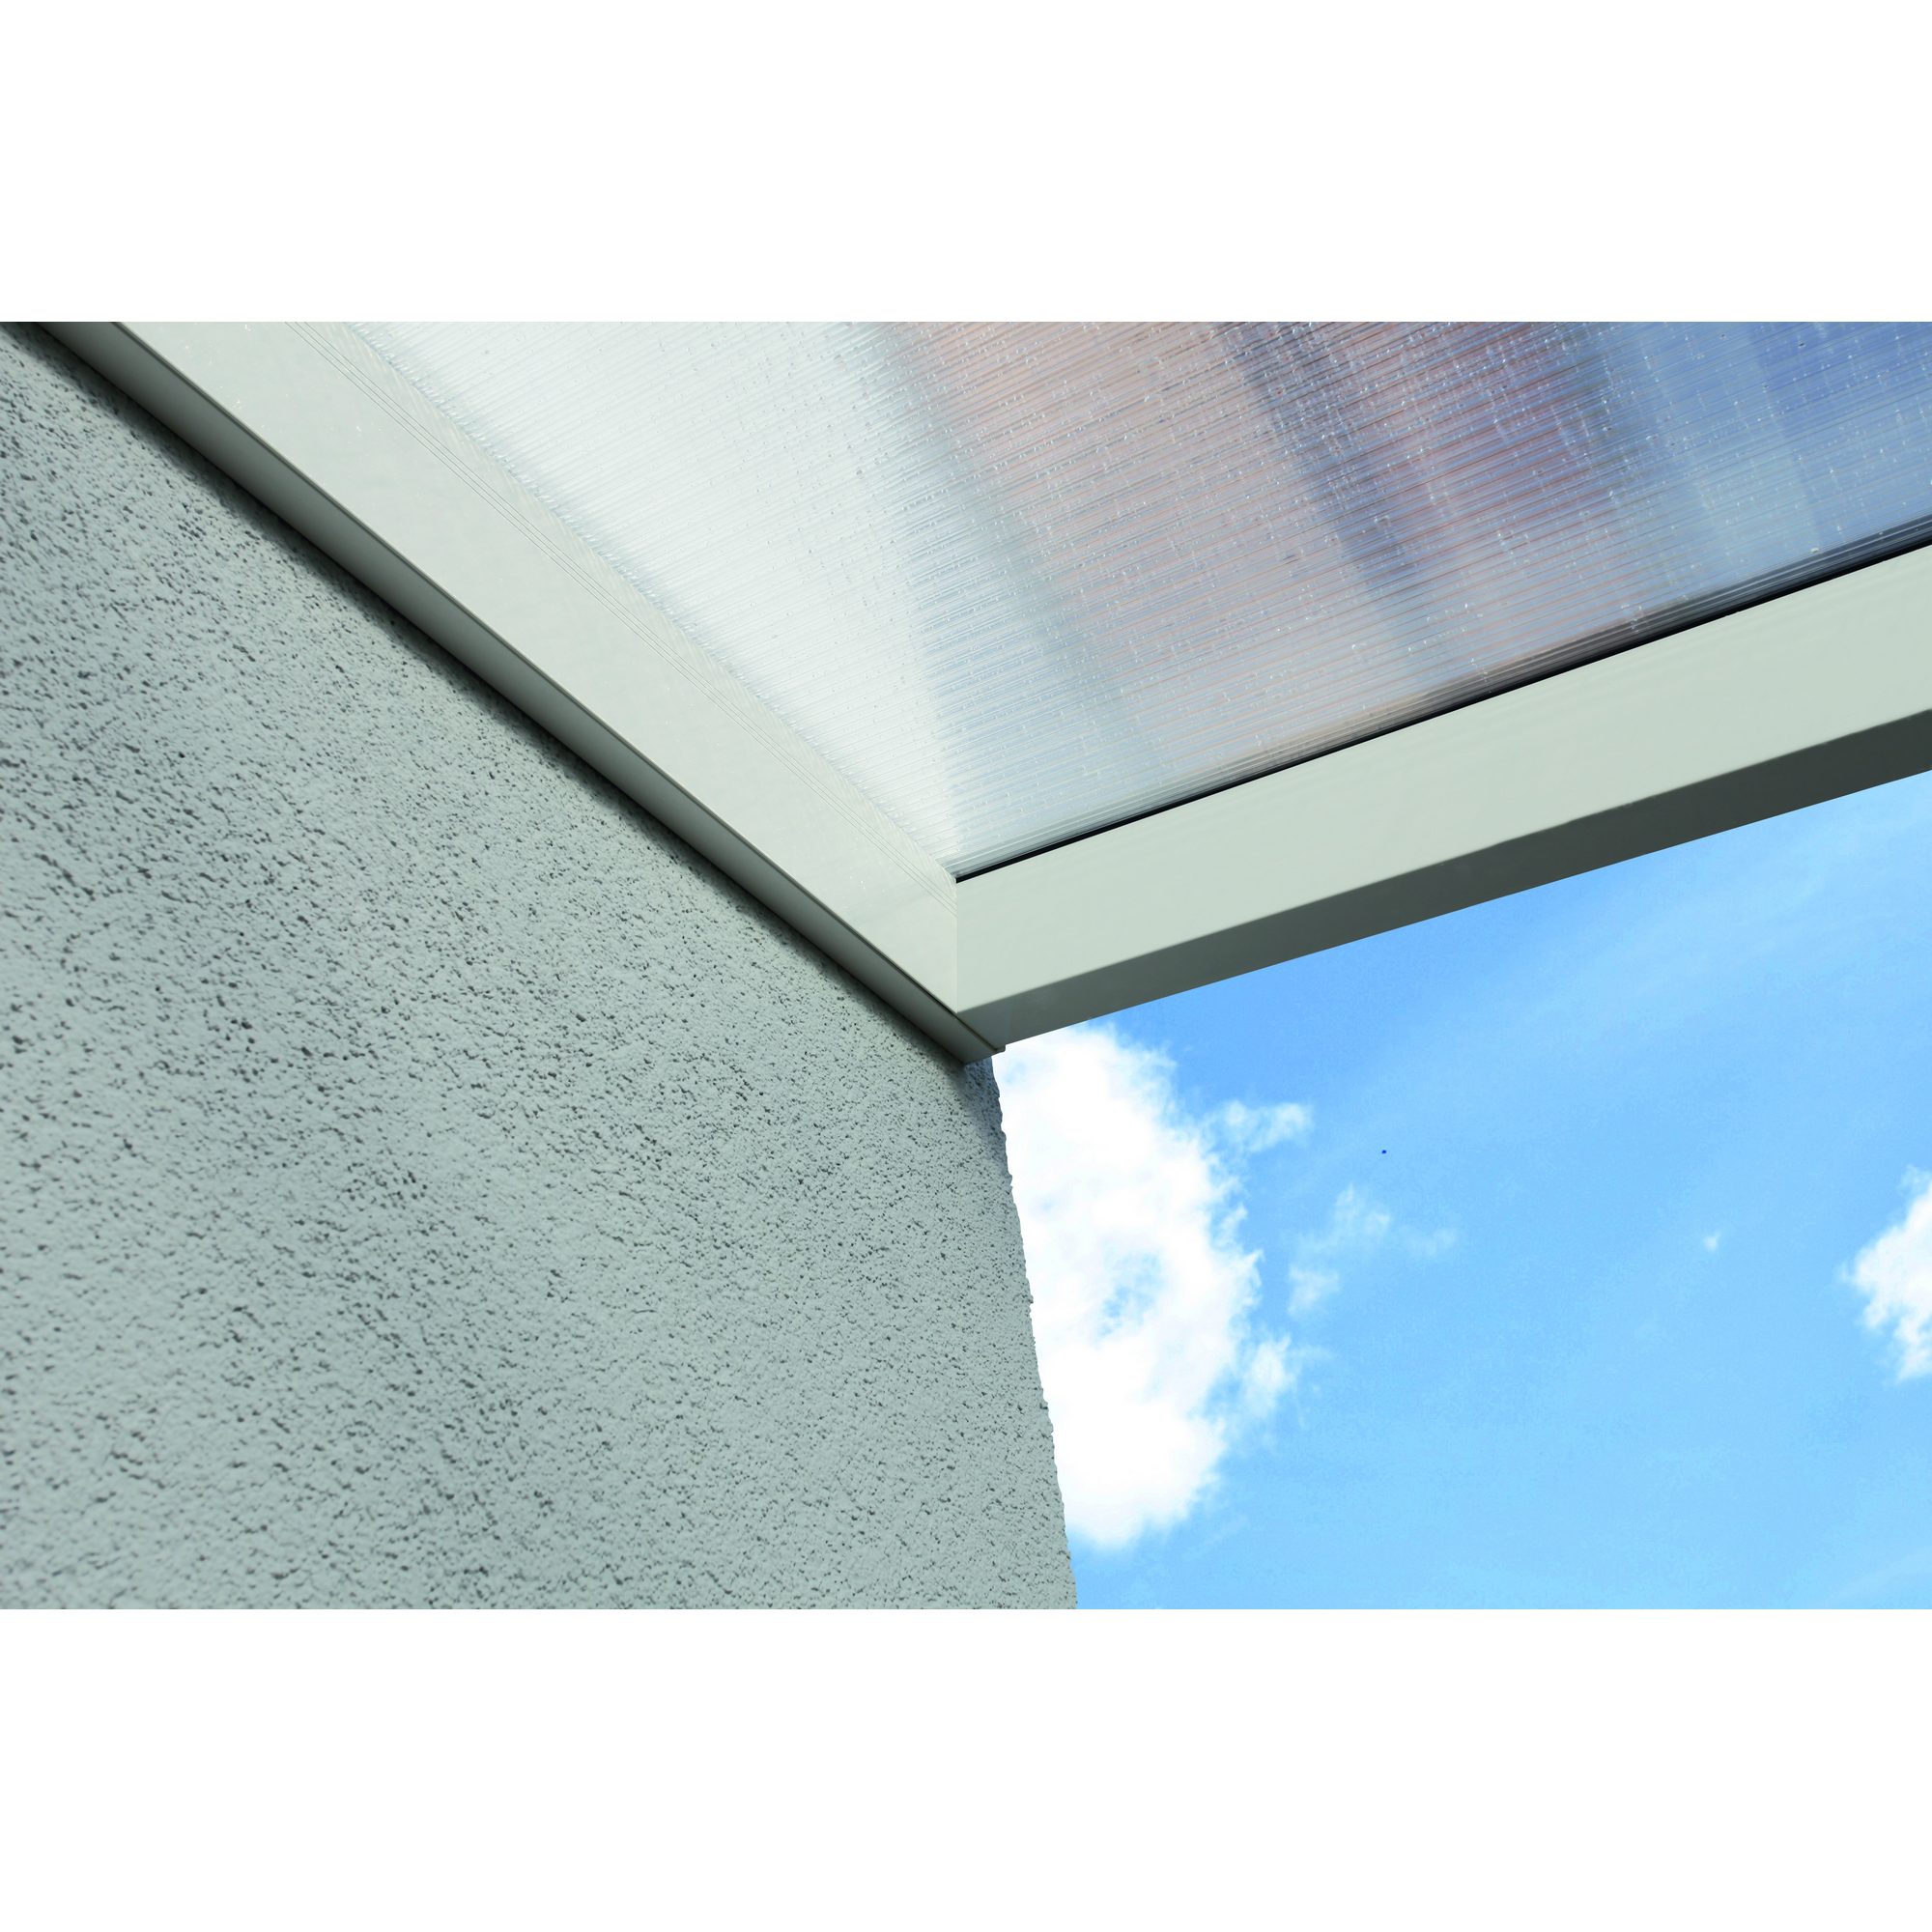 Terrassenüberdachung 'Garda' 434 x 257 cm Aluminium Doppelstegplatten weiß + product picture